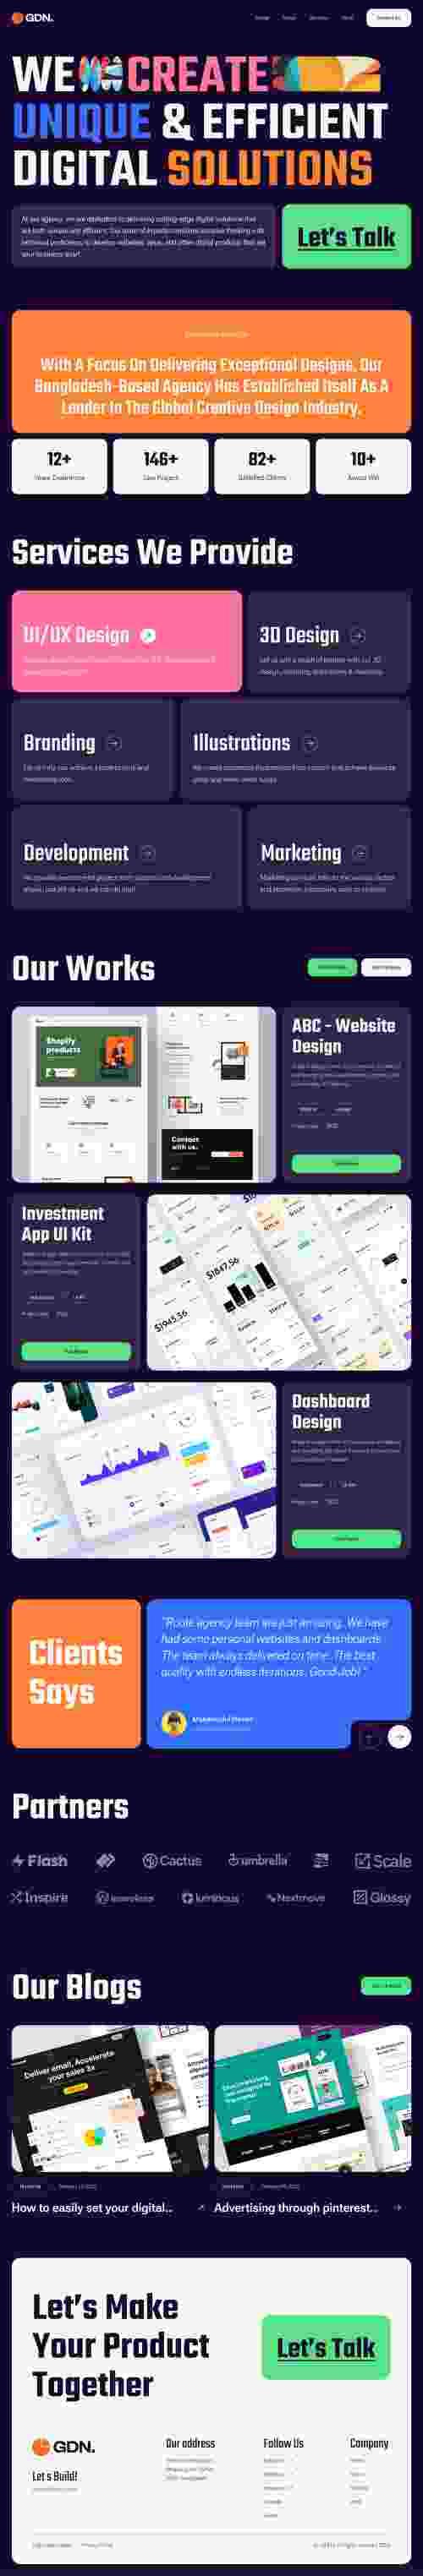 UIHut - GDN - Digital Agency Landing Page Design - 25153